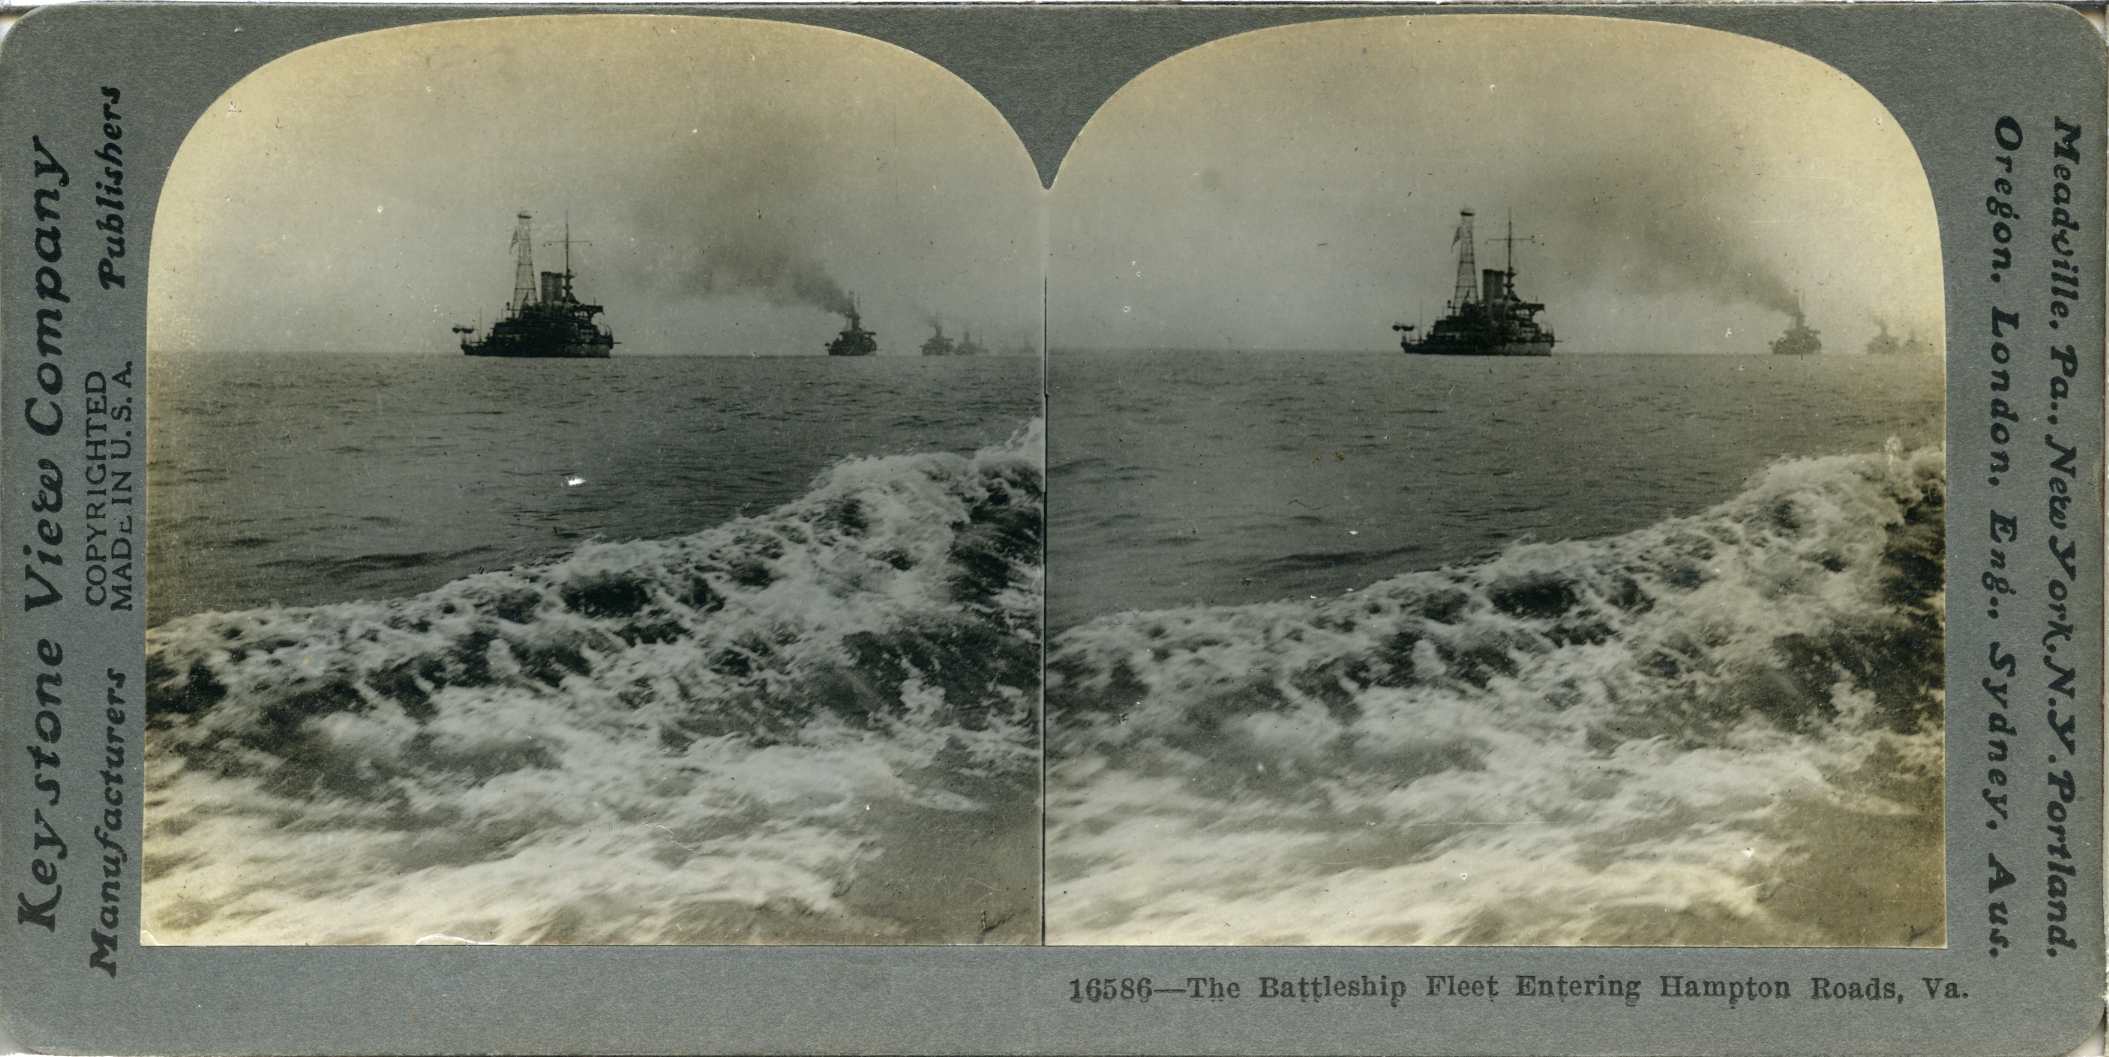 The Battleship Fleet Entering Hampton Roads, Va.